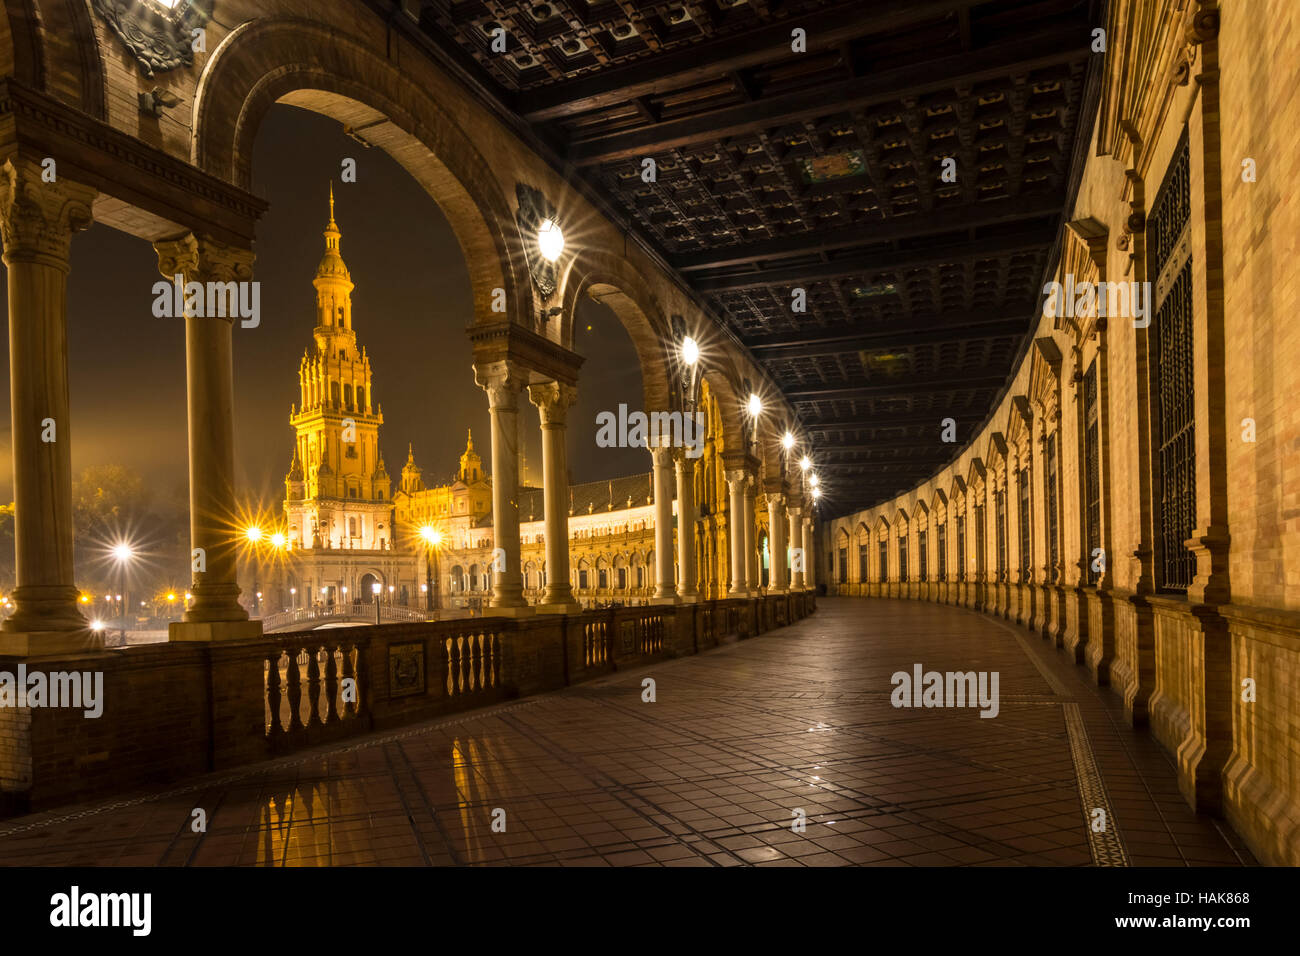 Plaza de espana-spain square-Seville, Andalusia, Spain, Europe. Traditional bridge detail Stock Photo